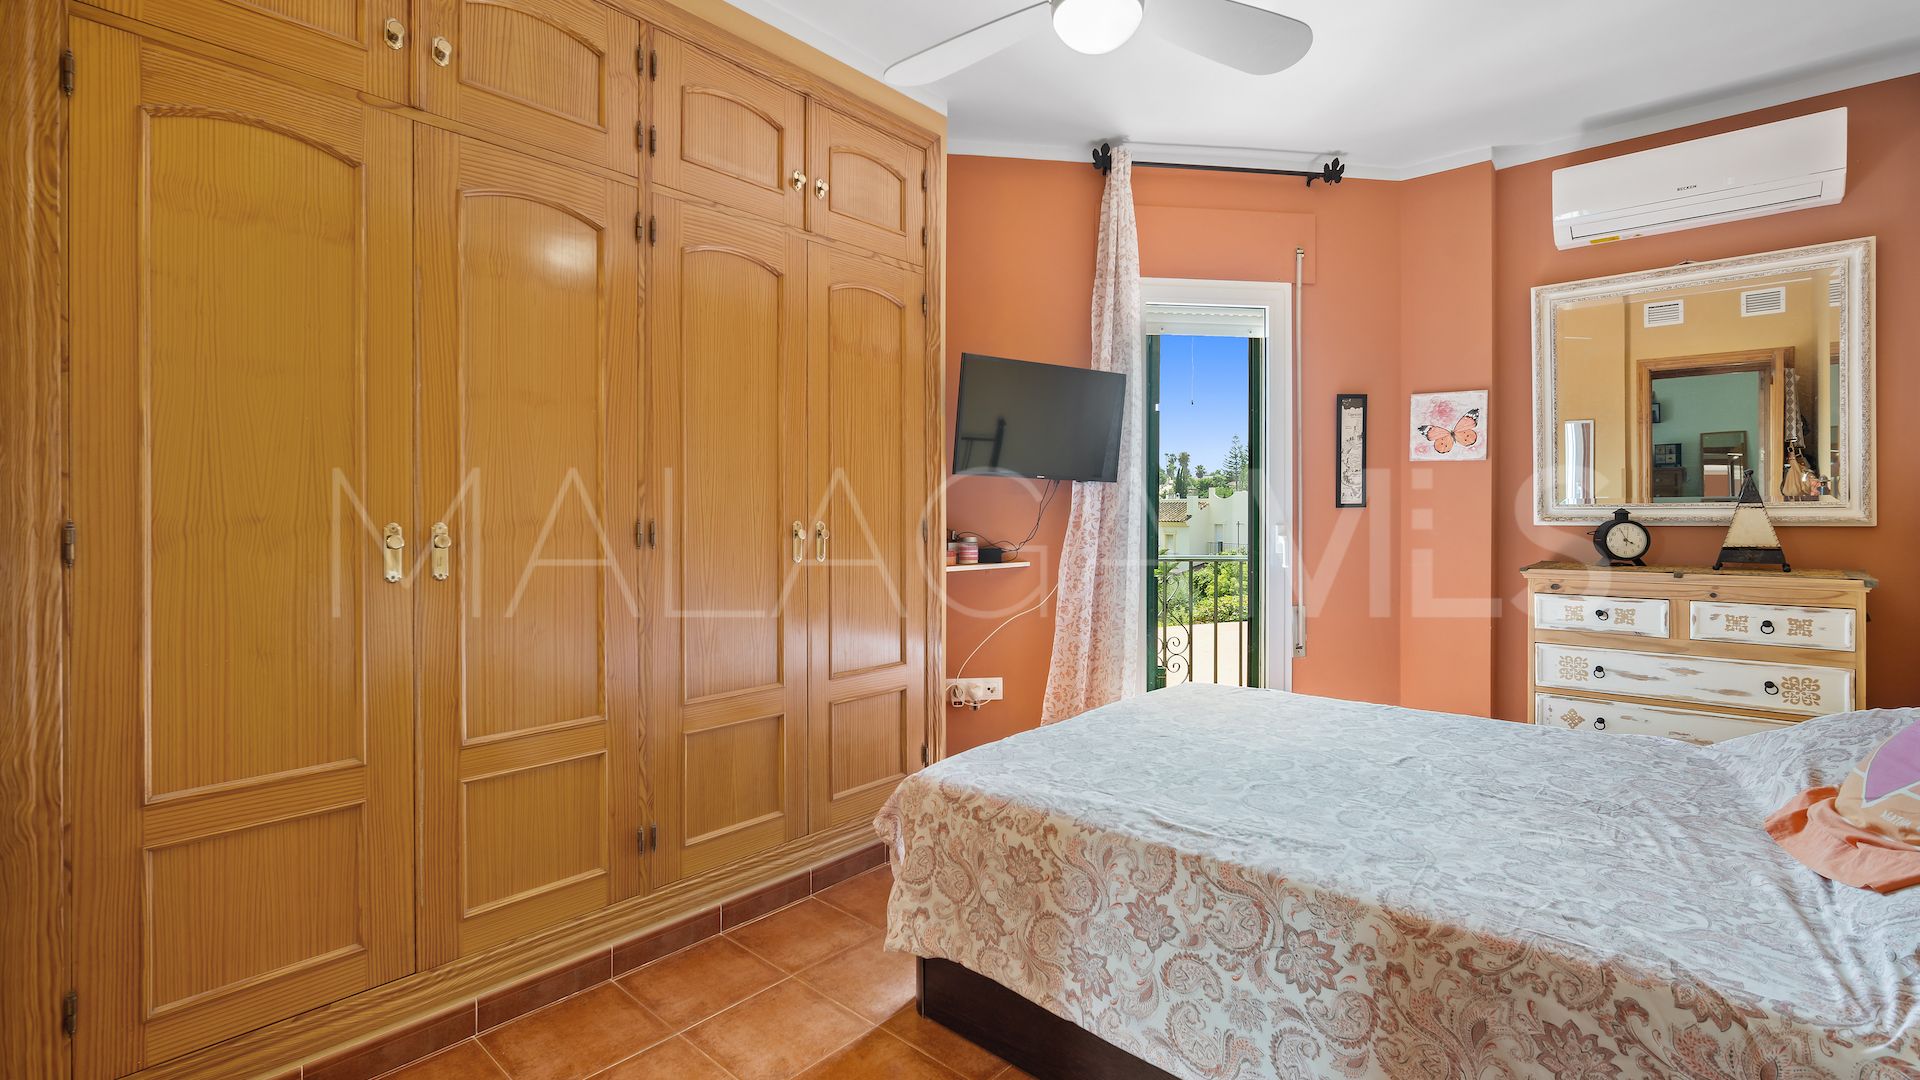 Adosado with 4 bedrooms for sale in Sierrezuela